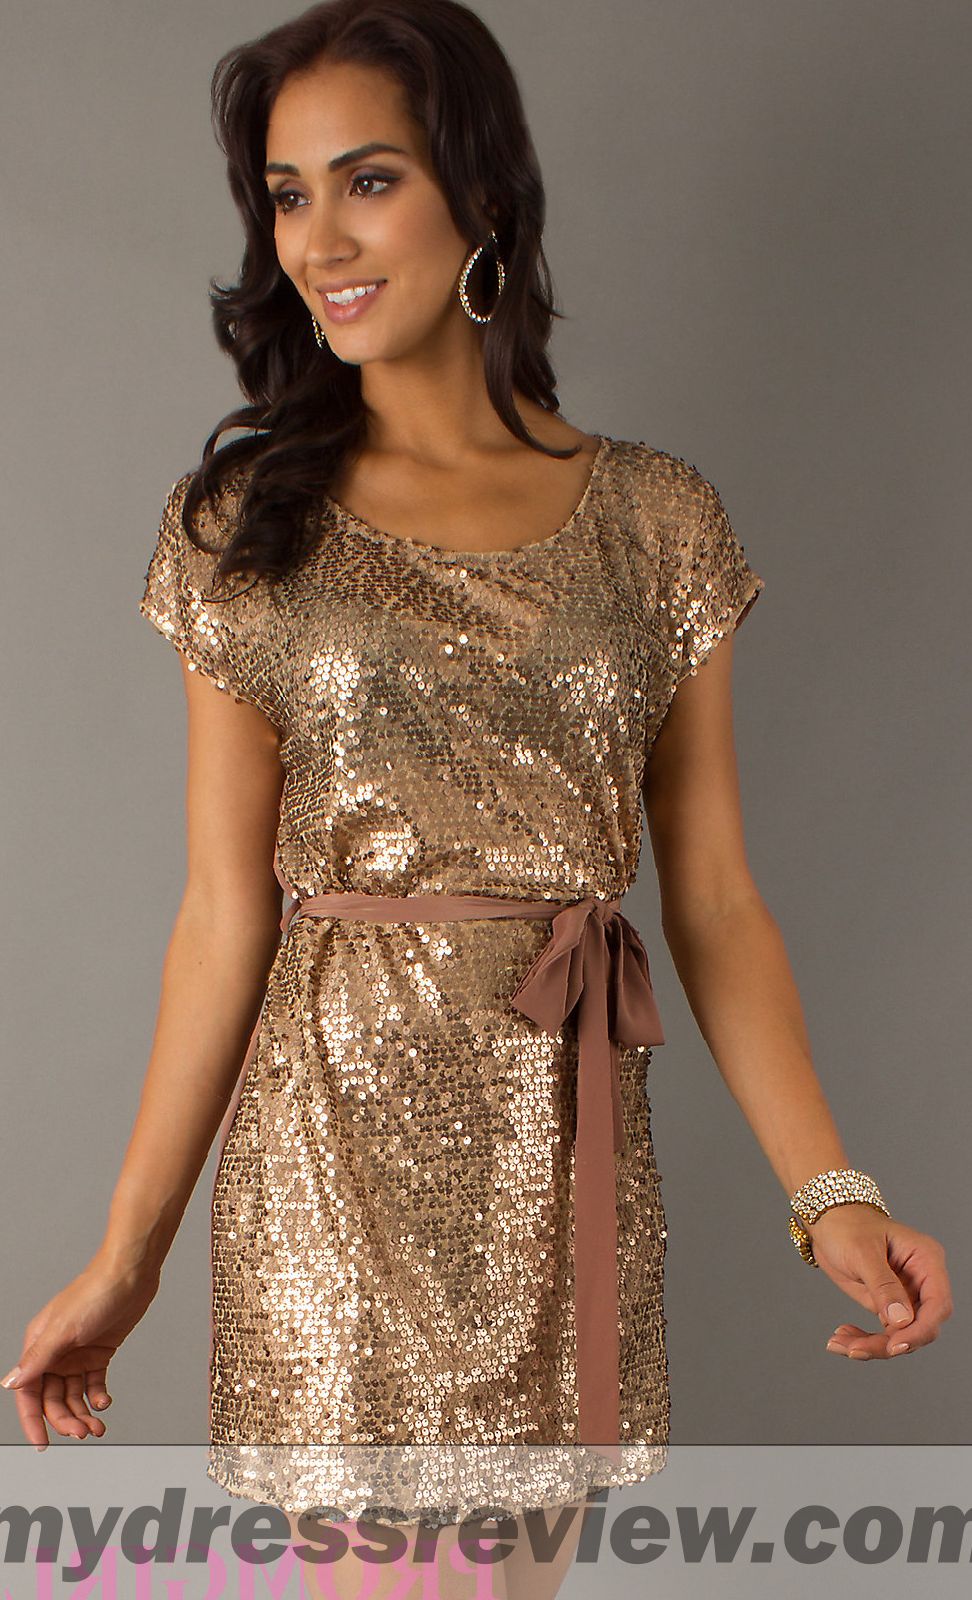 Black Dress Gold Sequins & Make You Look Like A Princess